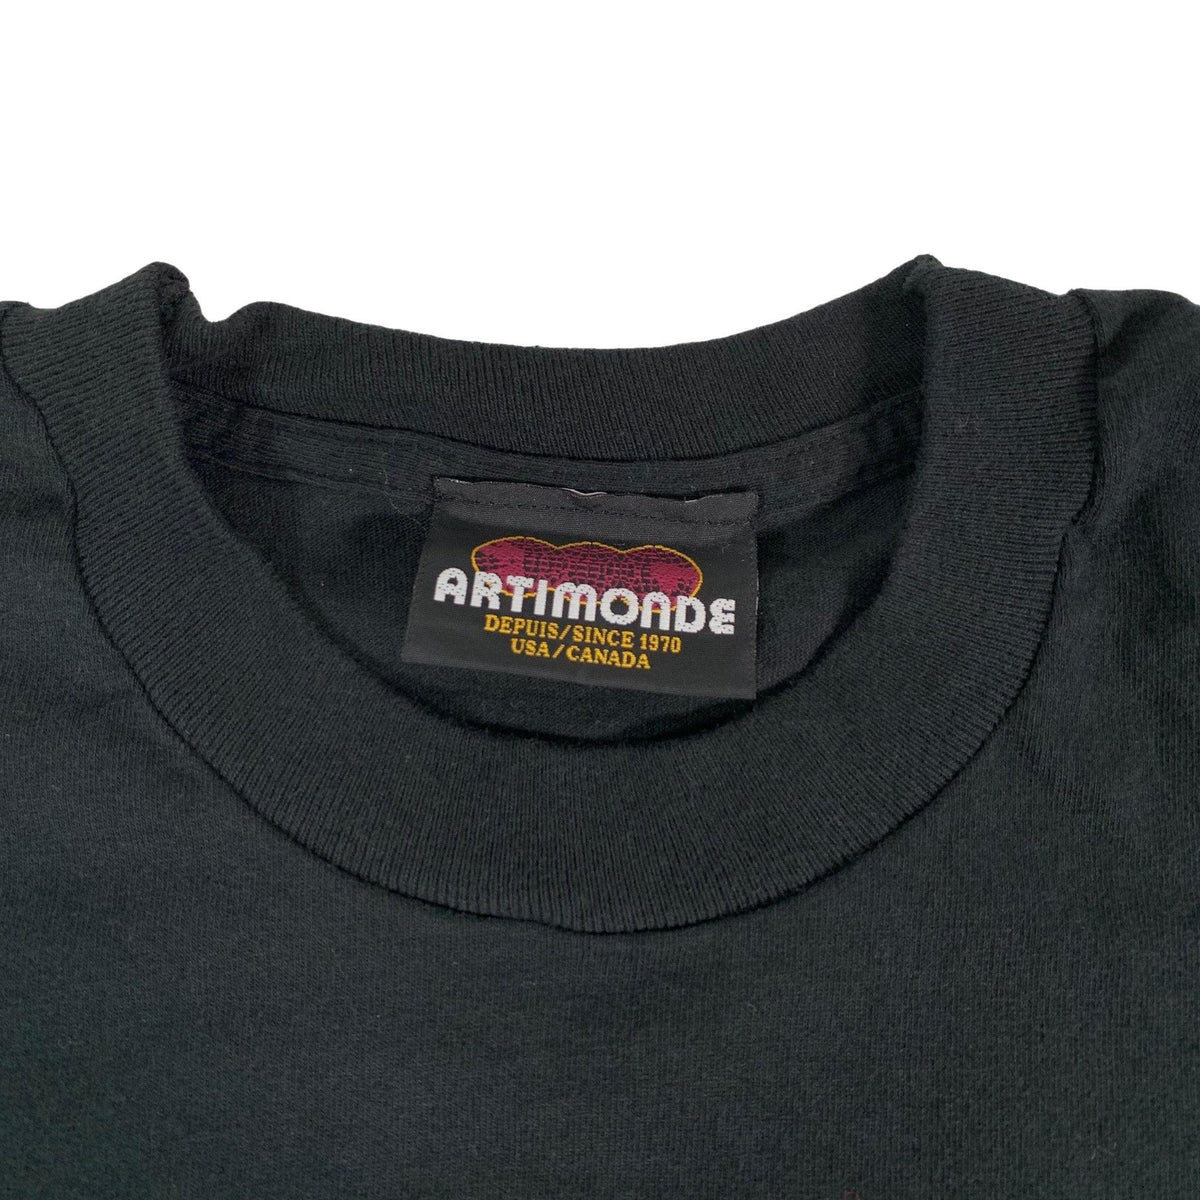 Vintage Original 1997 Artimonde 2Pac Poetic Justice Long Sleeve T Shirt Tag